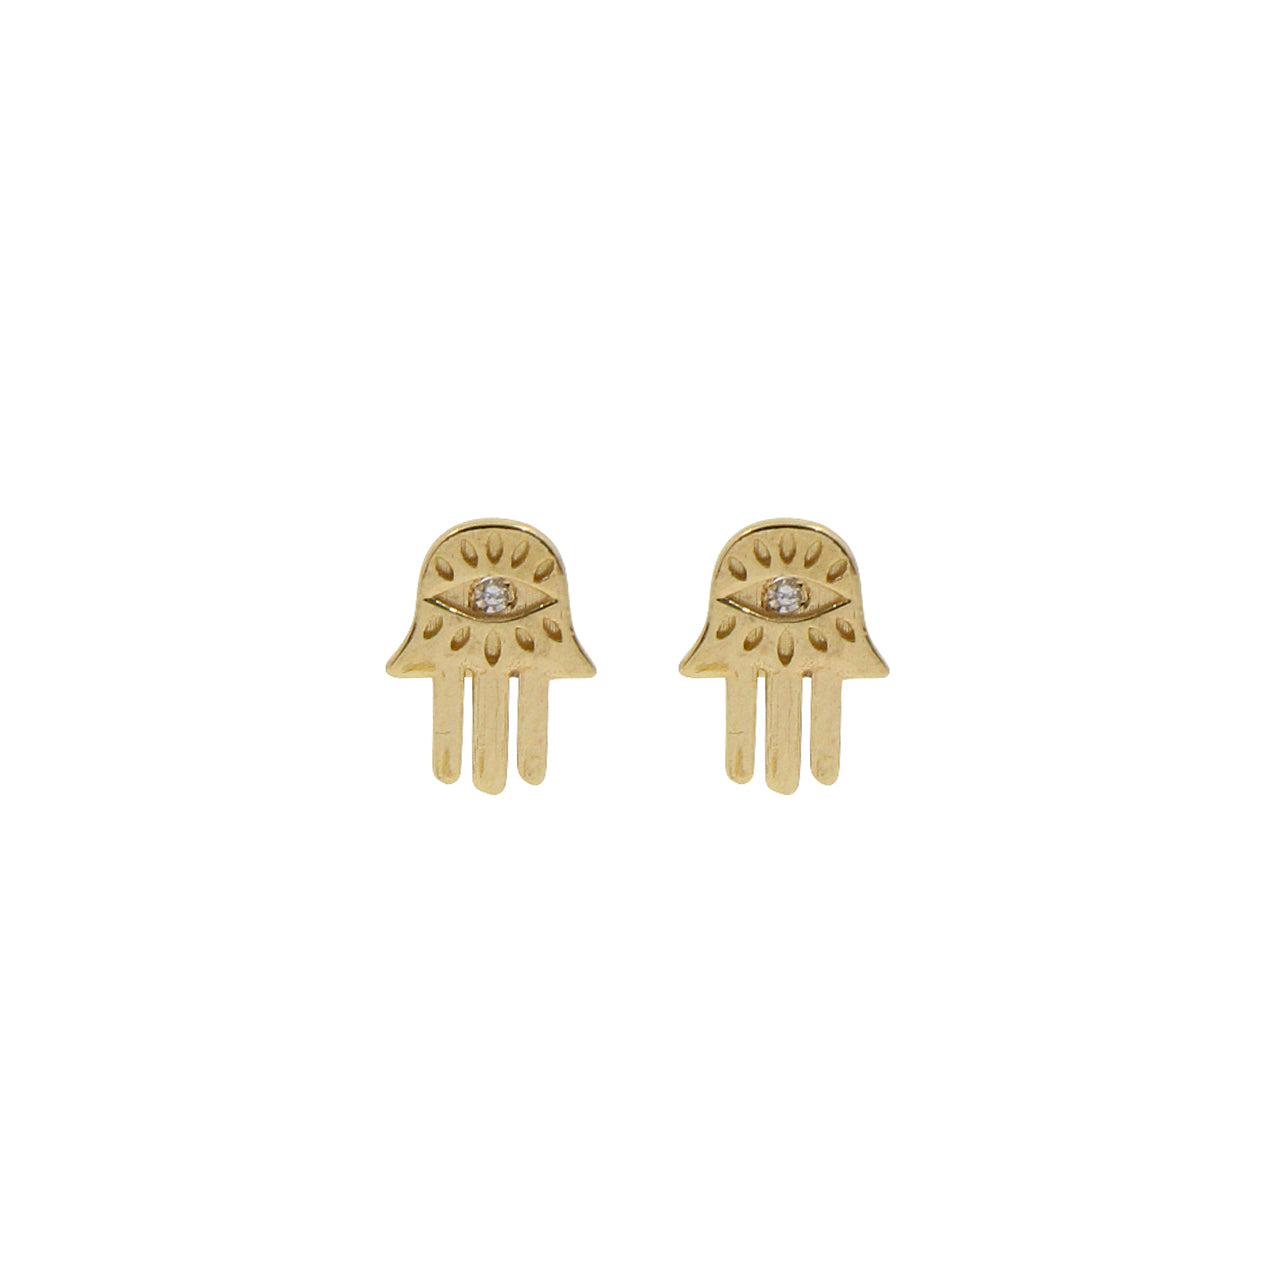 Hamsa Hand 9 carat gold earrings